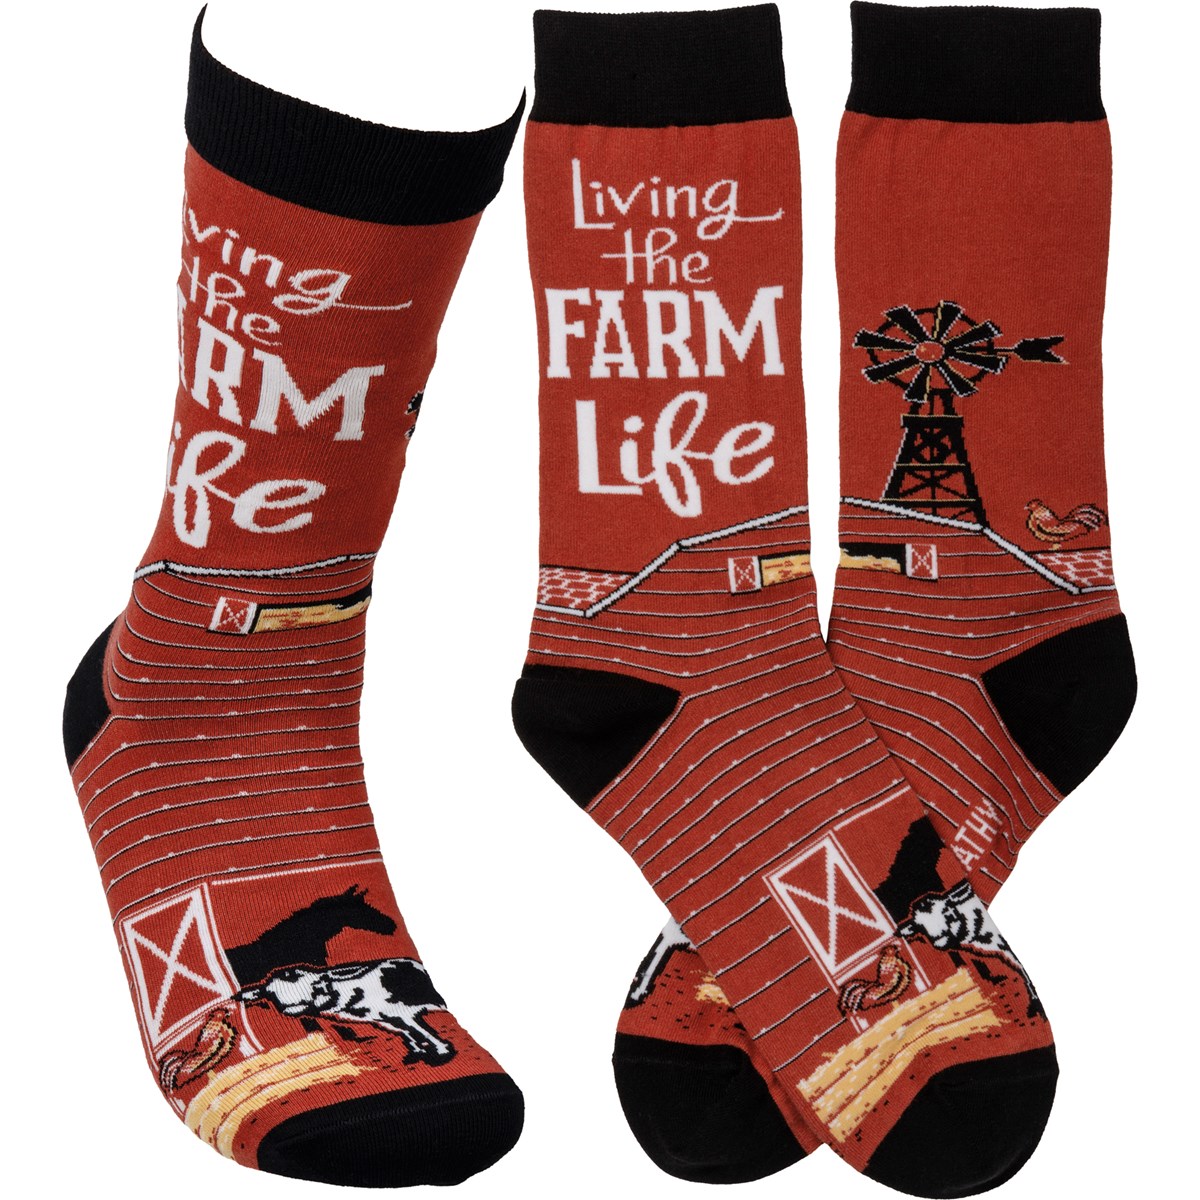 Socks - Living The Farm Life - One Size Fits Most - Cotton, Nylon, Spandex